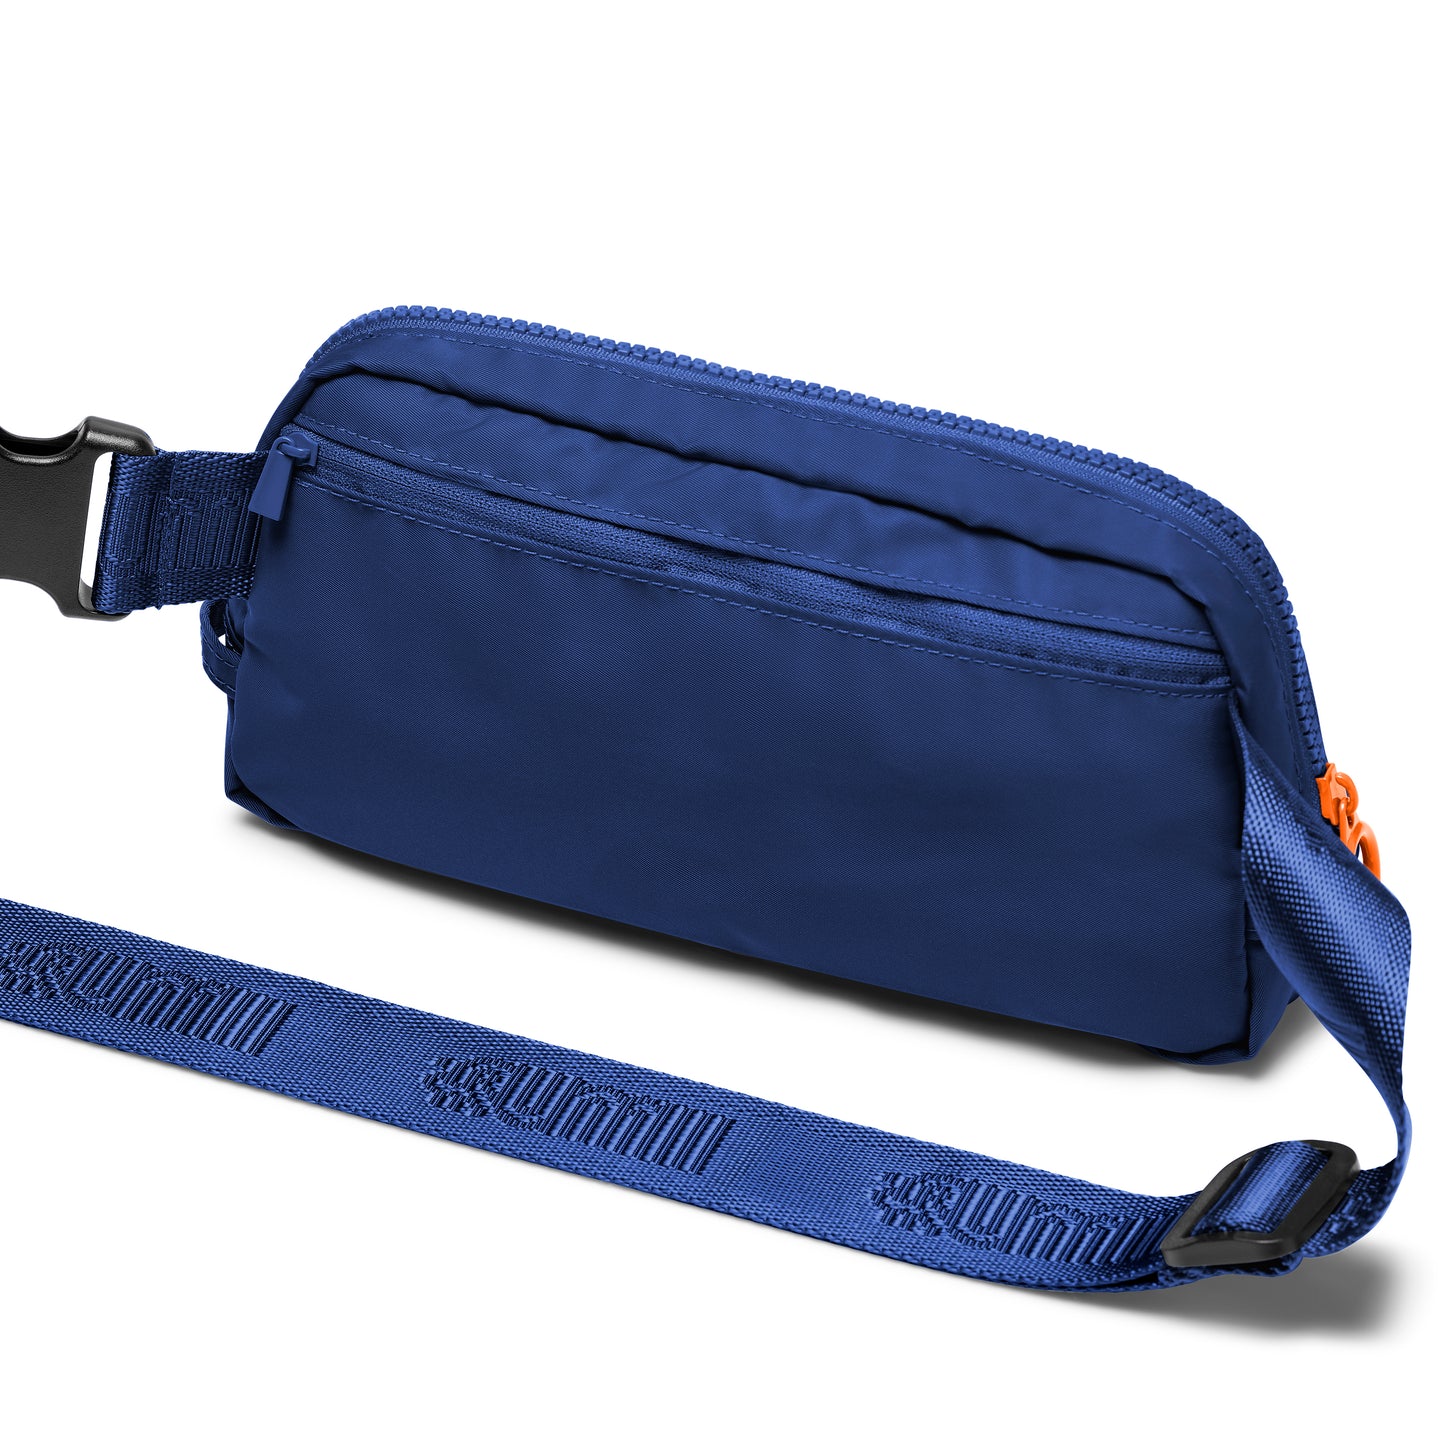 Navy blue Rumii Essential Bag for nurses